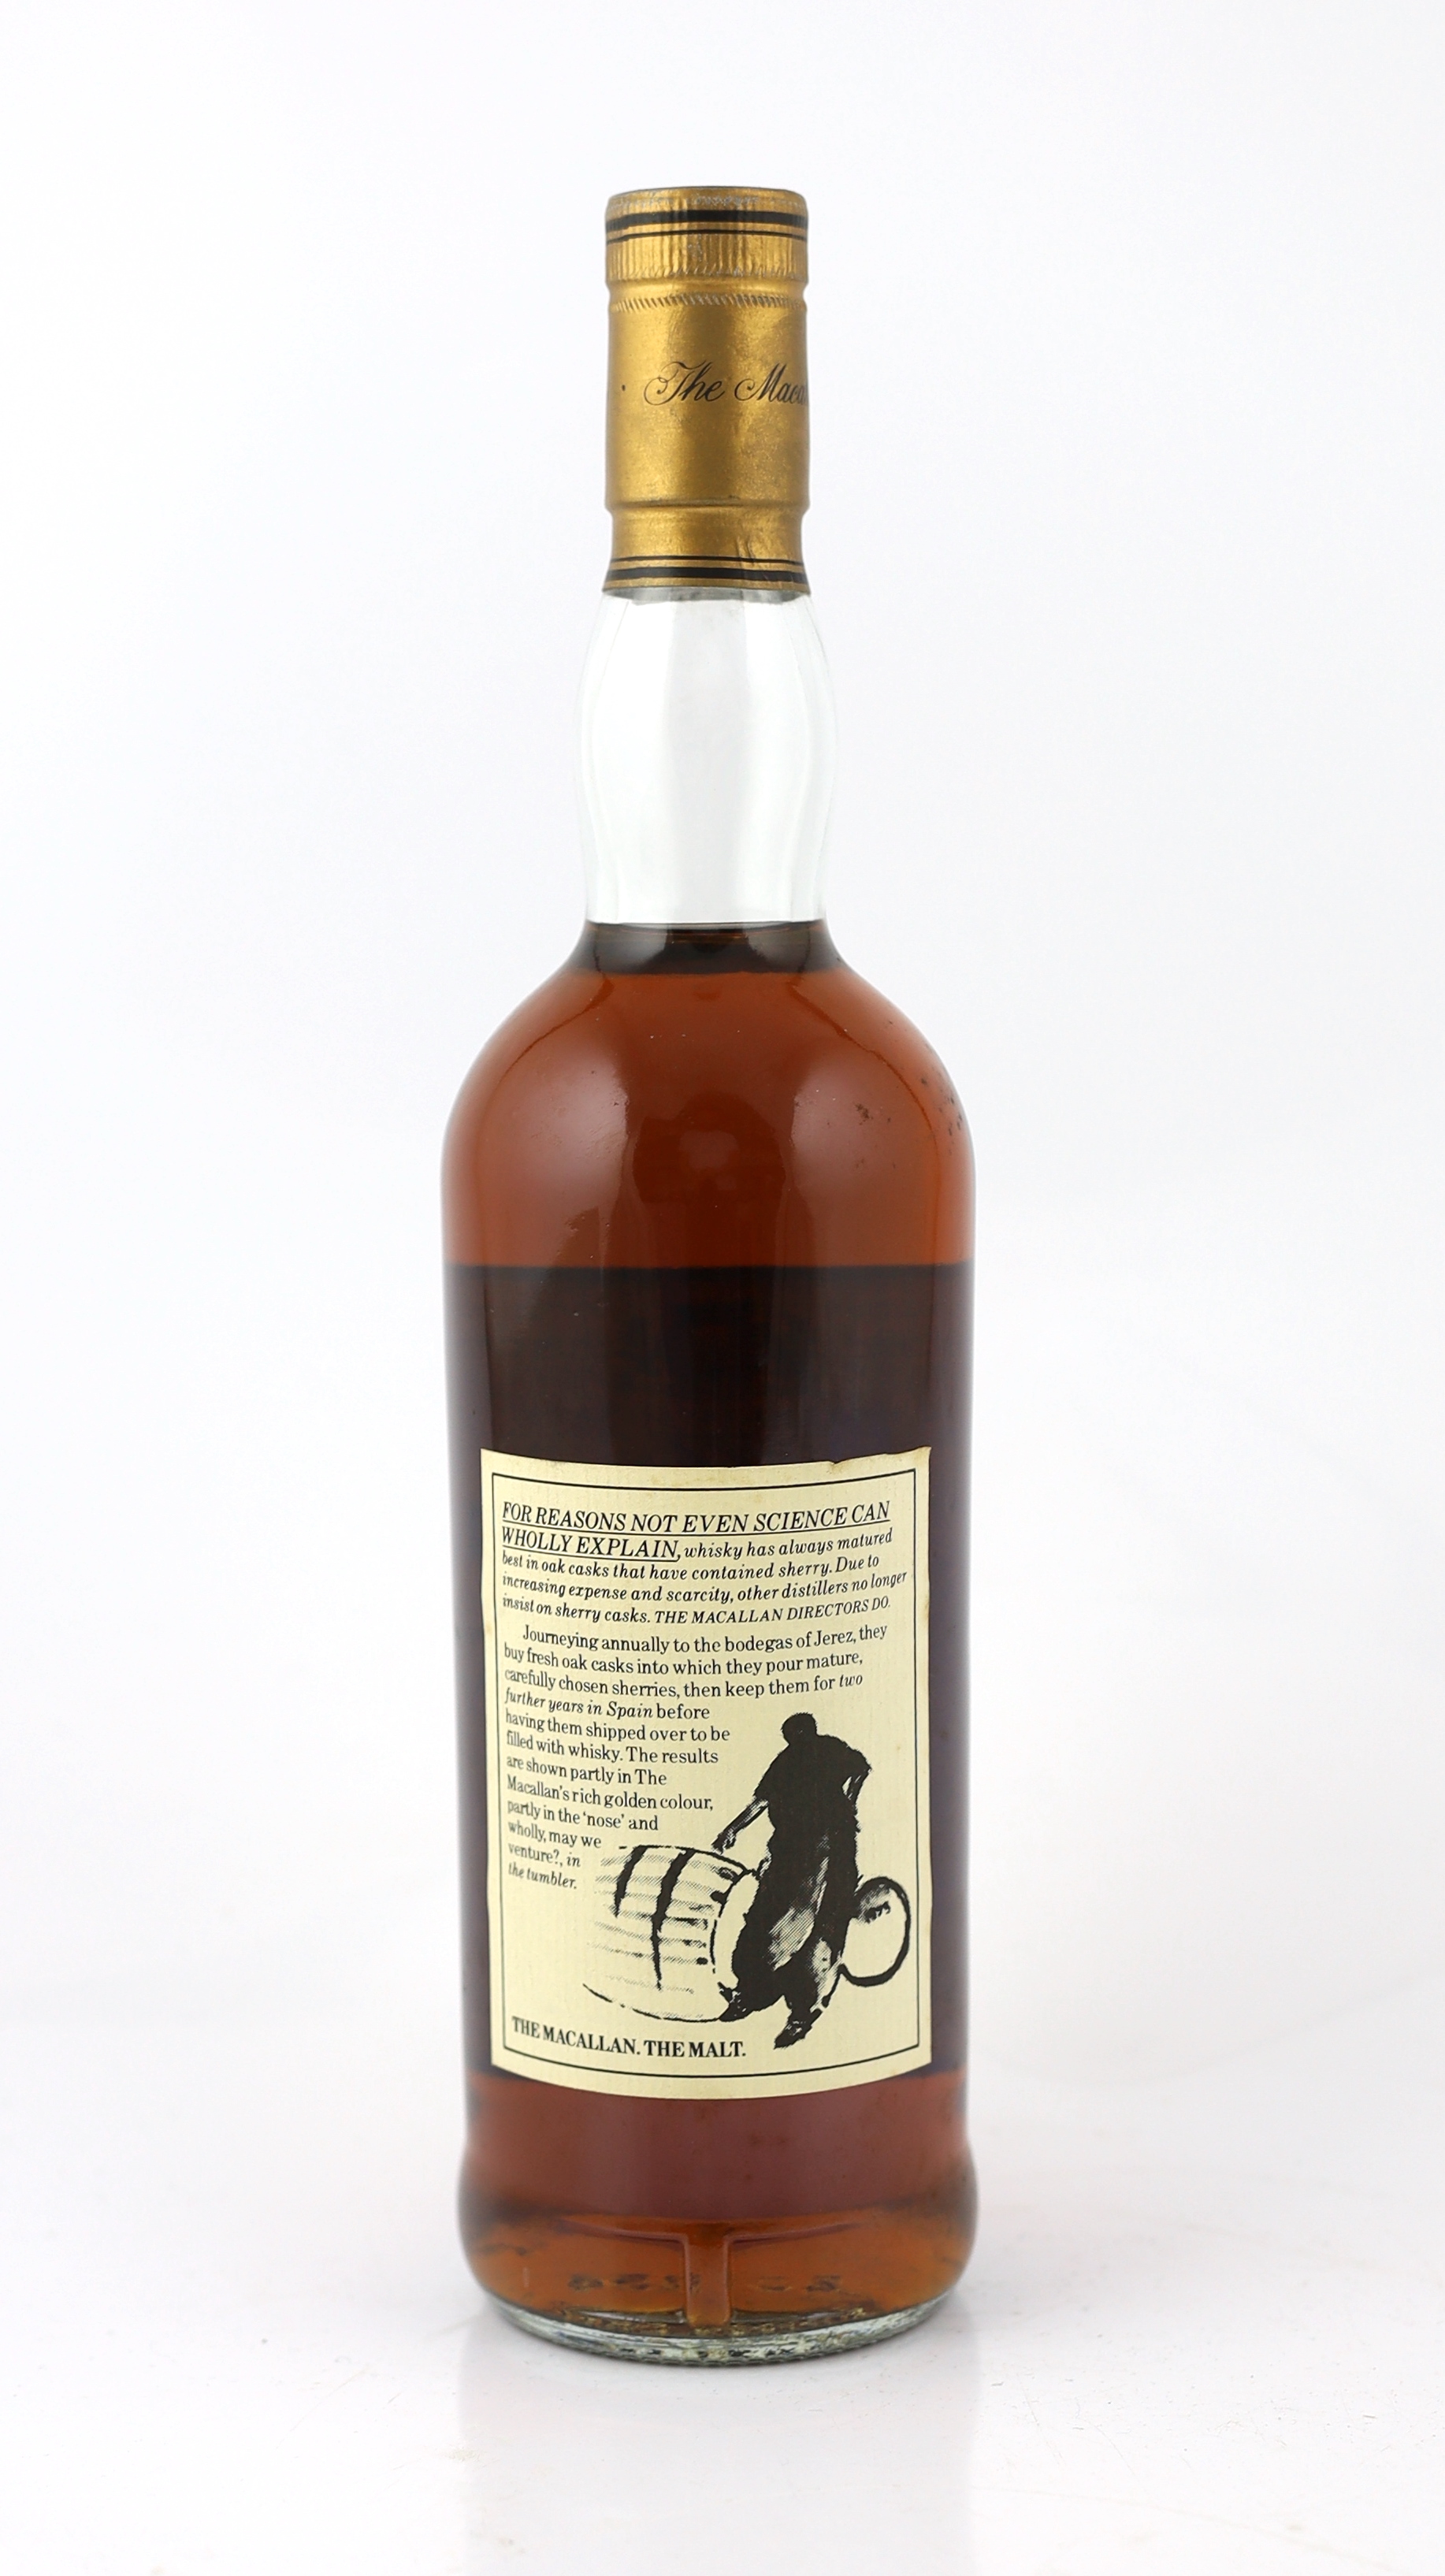 A bottle of The Macallan 1970 single Highland Malt Scotch Whisky